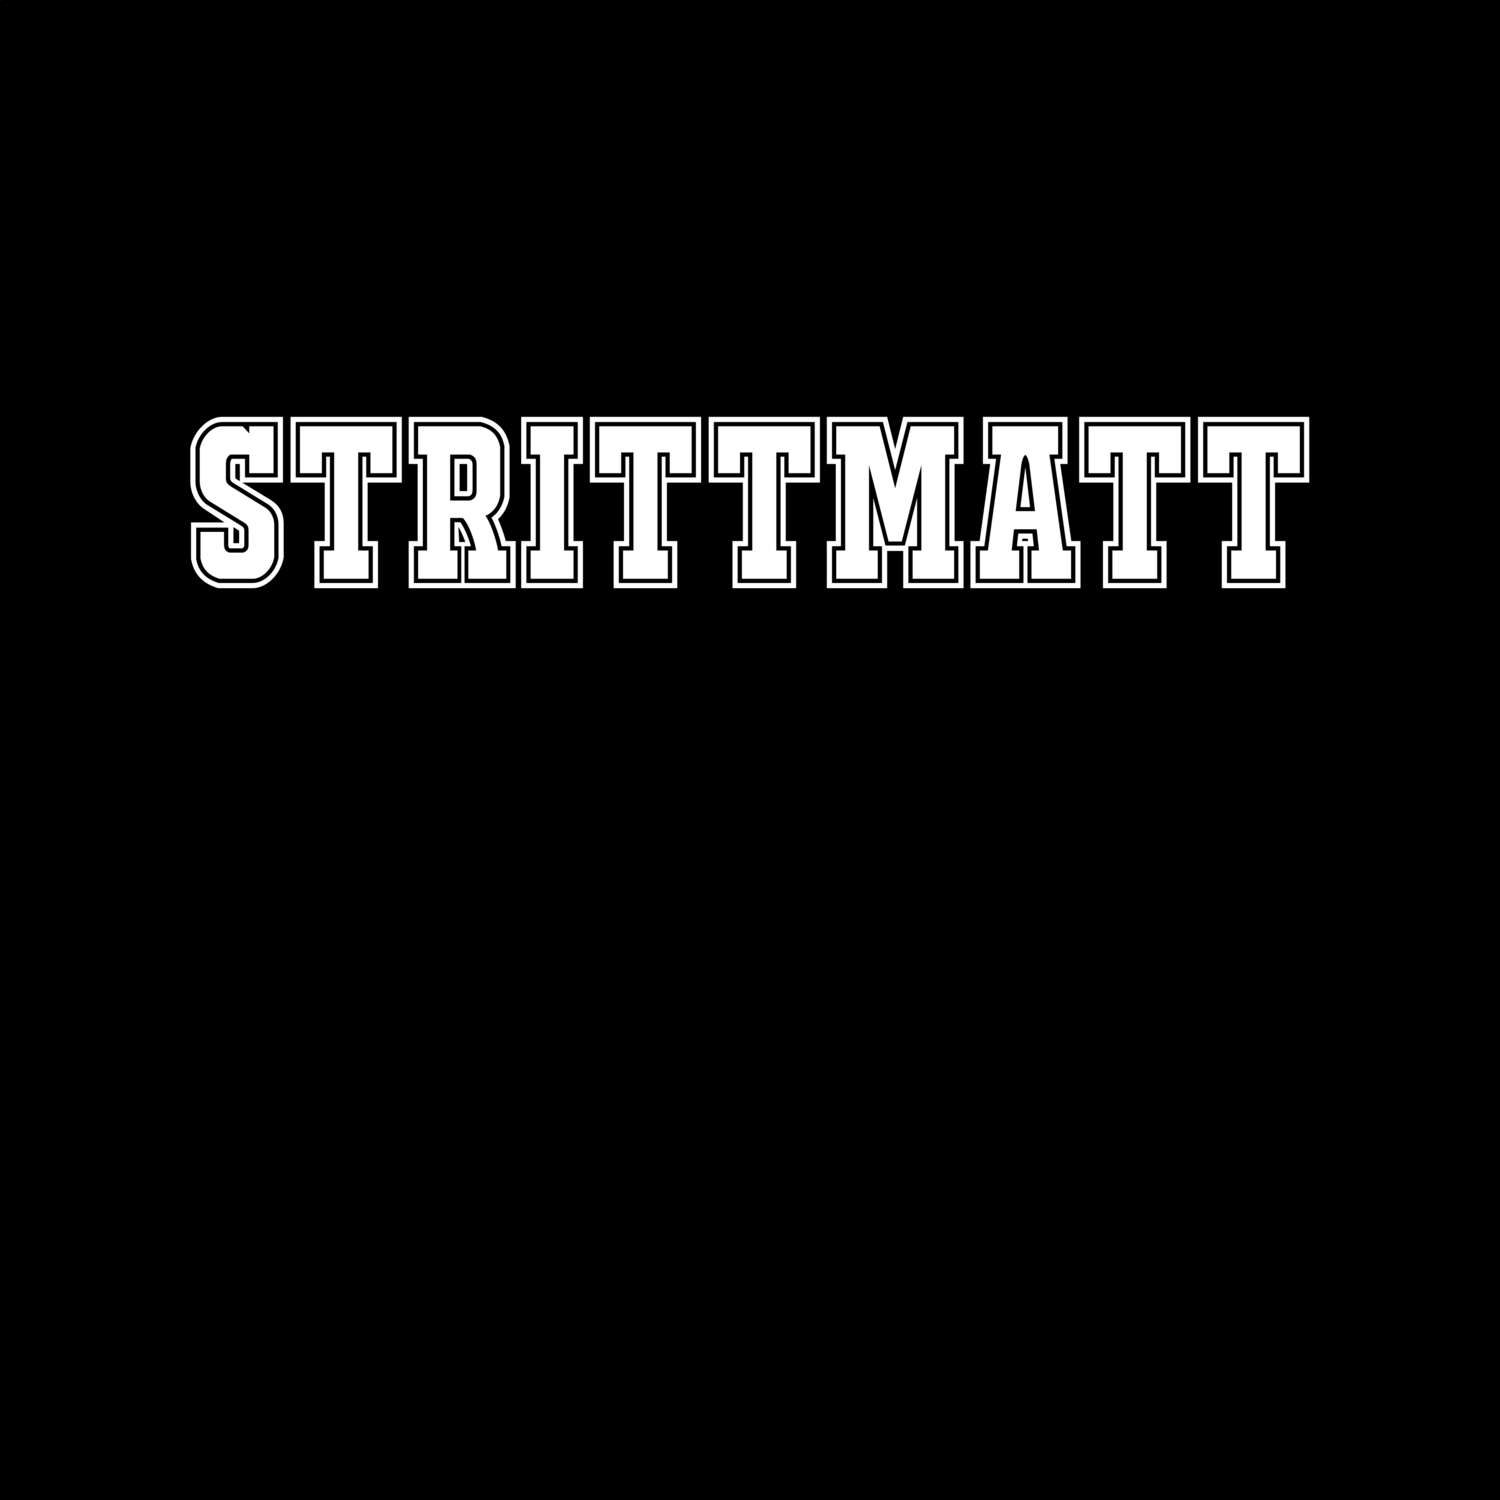 Strittmatt T-Shirt »Classic«